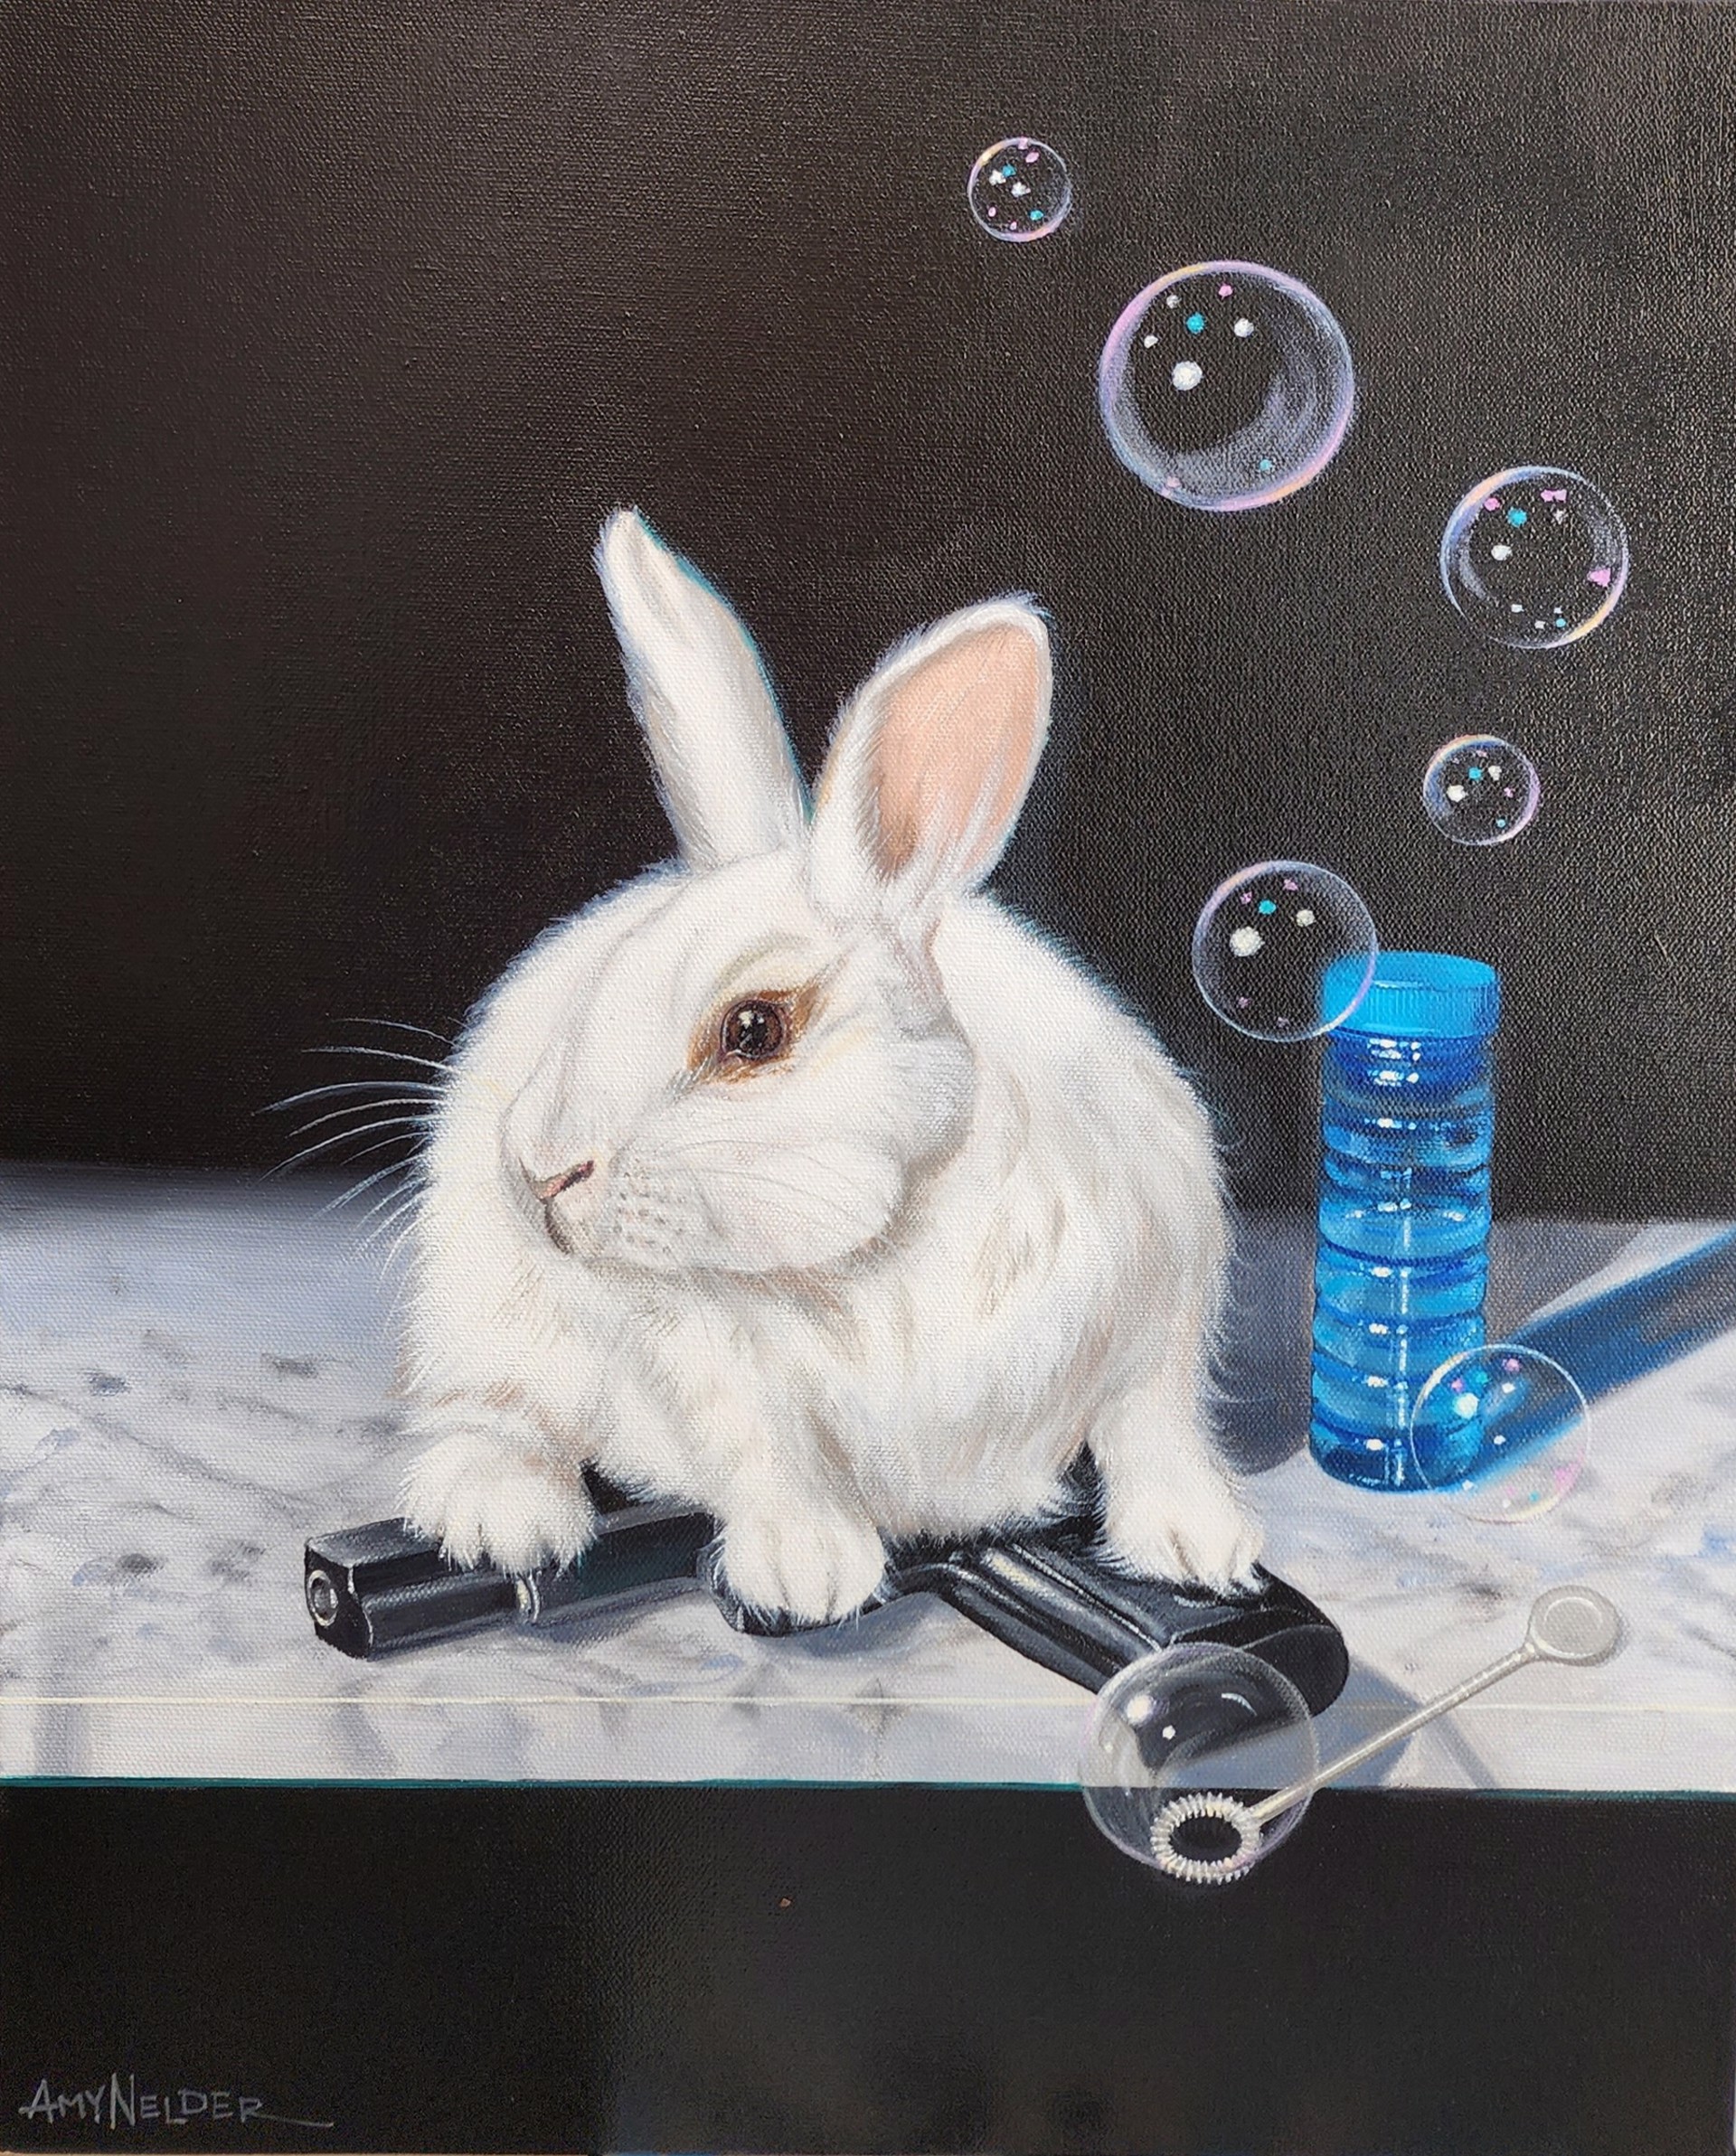 Bunnies and Guns #6 (Bunnies, Bubbles and Guns) by Amy Nelder